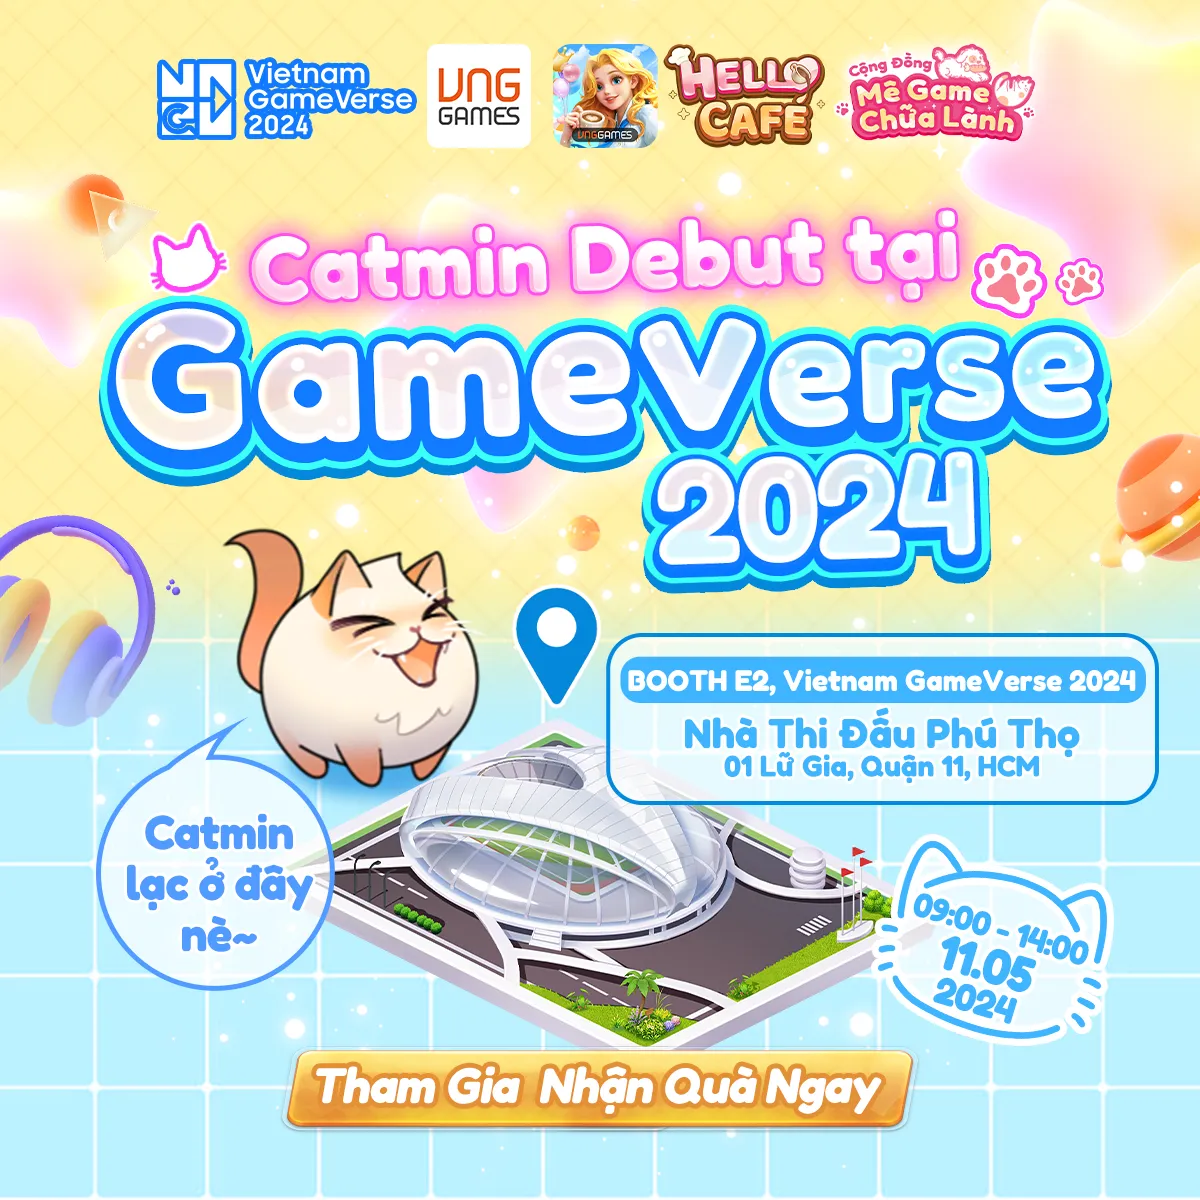 Catmin debut Gameverse